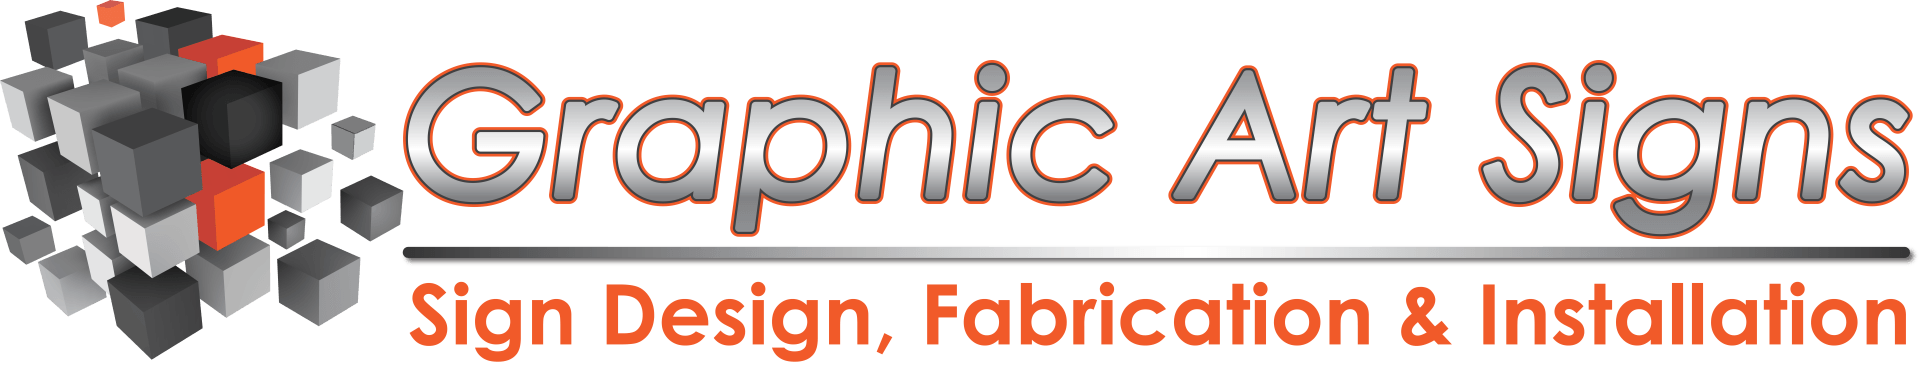 Sign Design, Fabrication & Installation